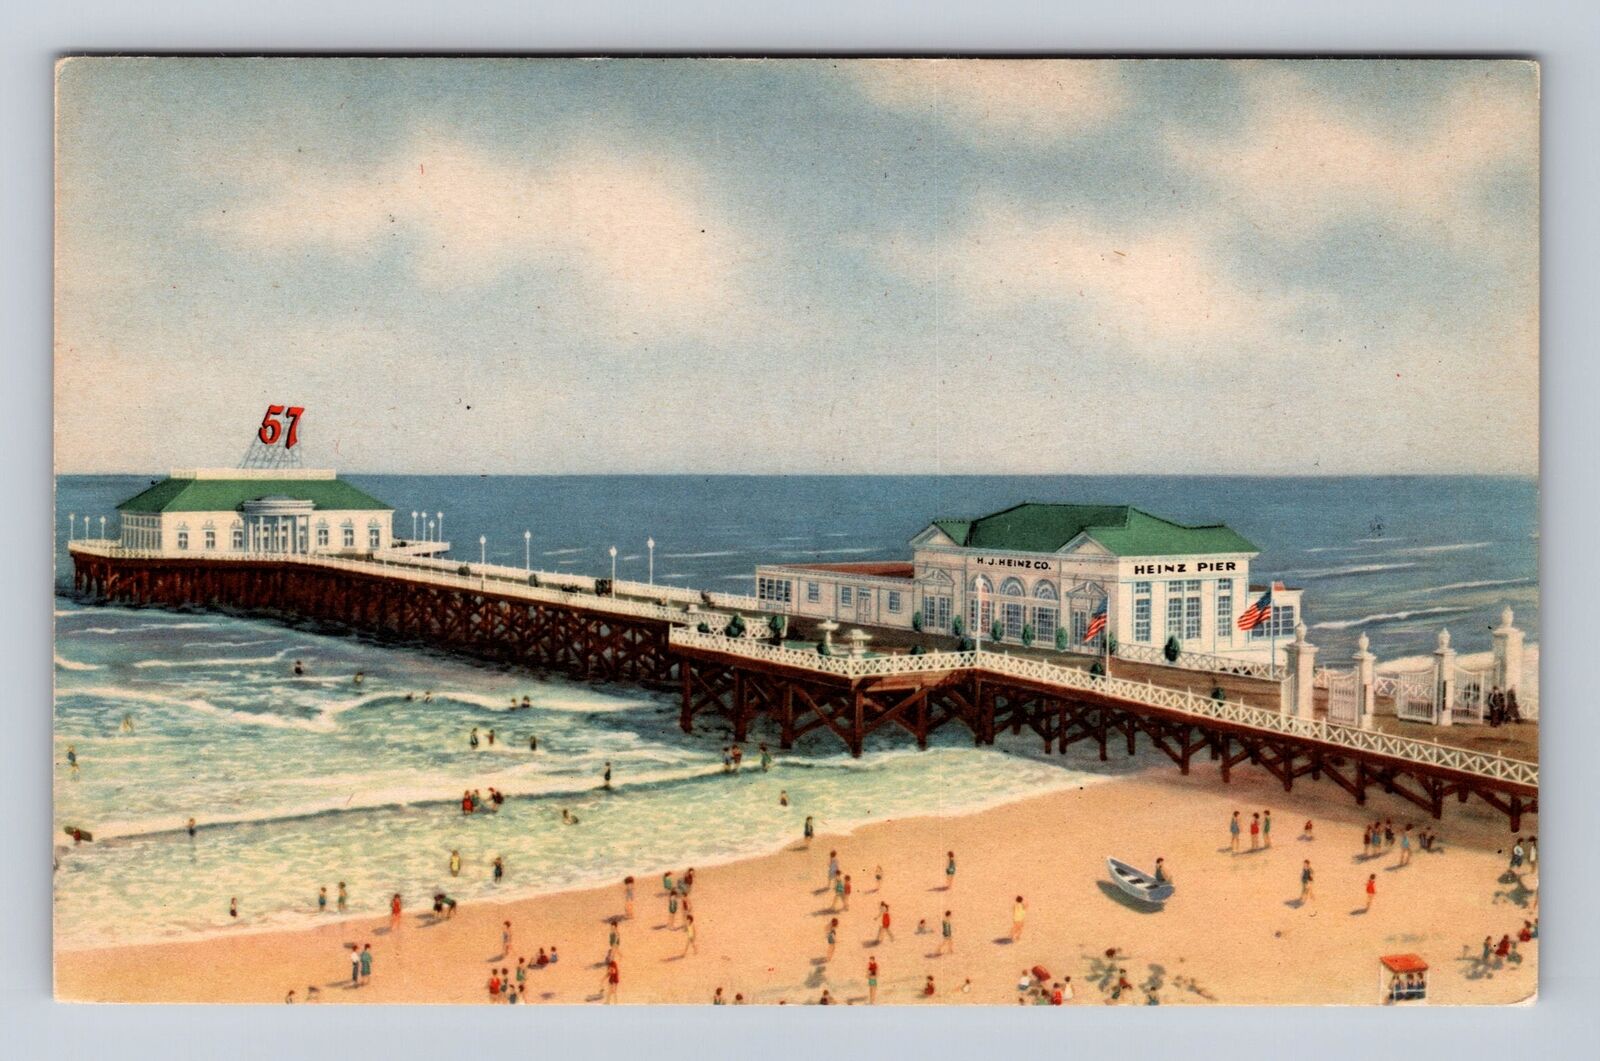 Atlantic City NJ-New Jersey, Heinz Ocean Pier, Antique Vintage Souvenir Postcard